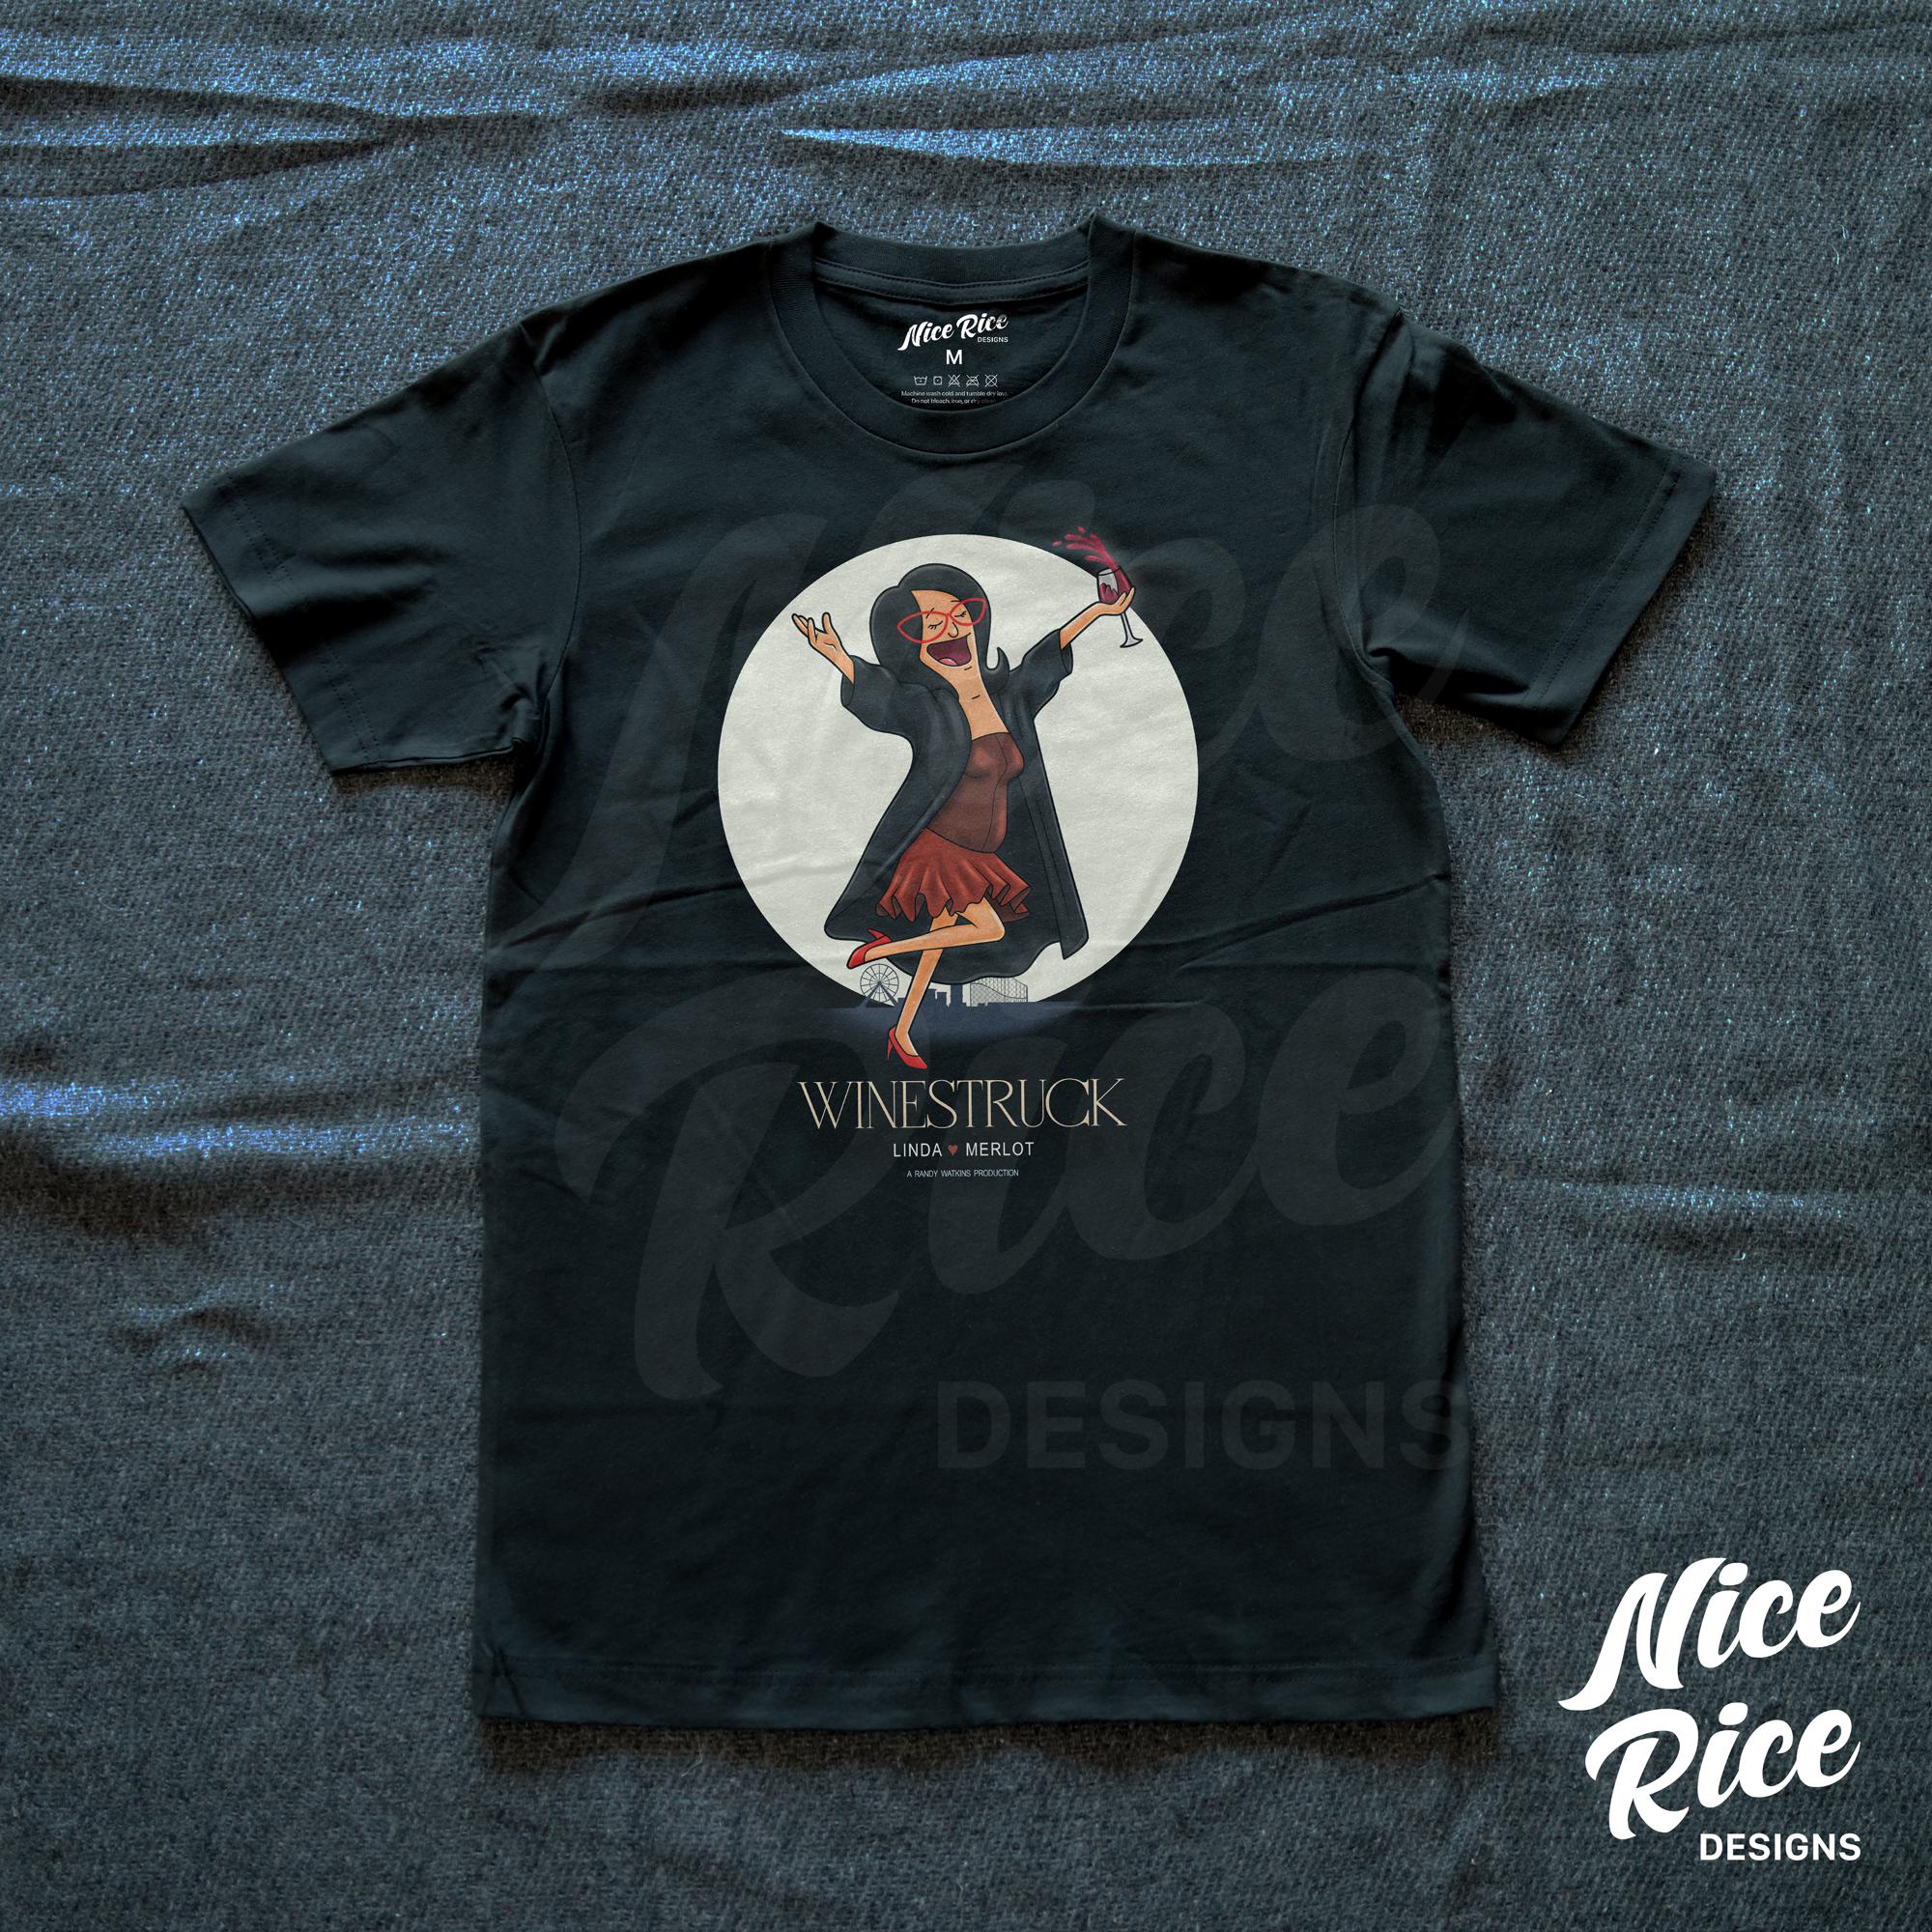 Winestruck Shirt by Nice Rice Designs